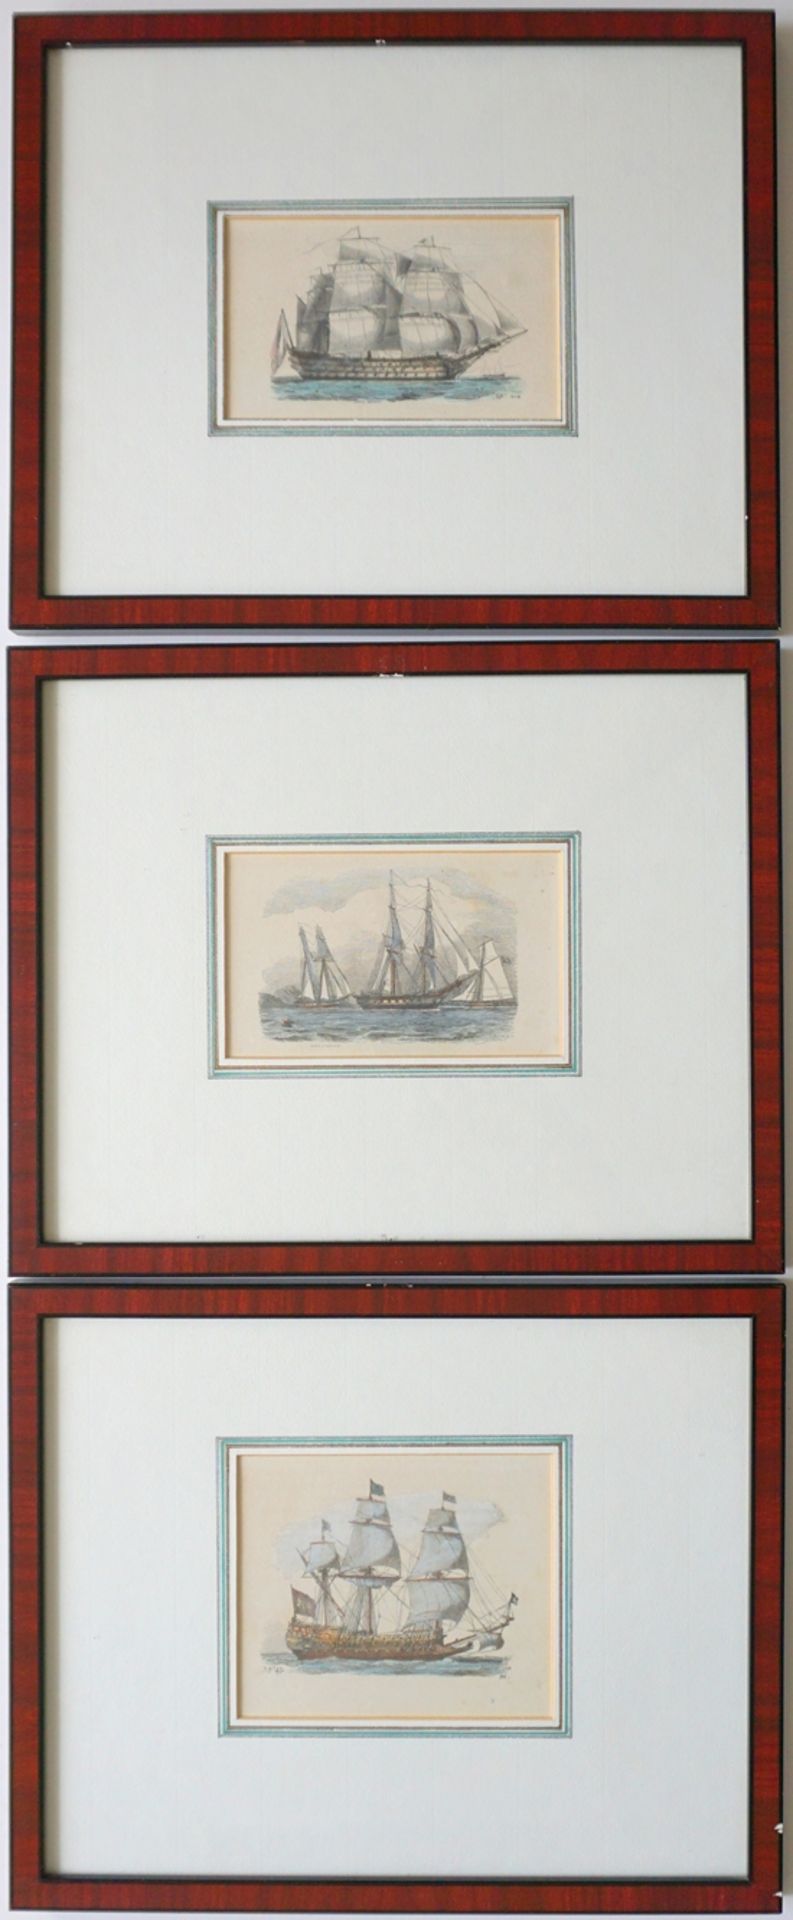 Monogrammist MF, "Segelboote", kolorierte Kupferstiche, 19. Jh.